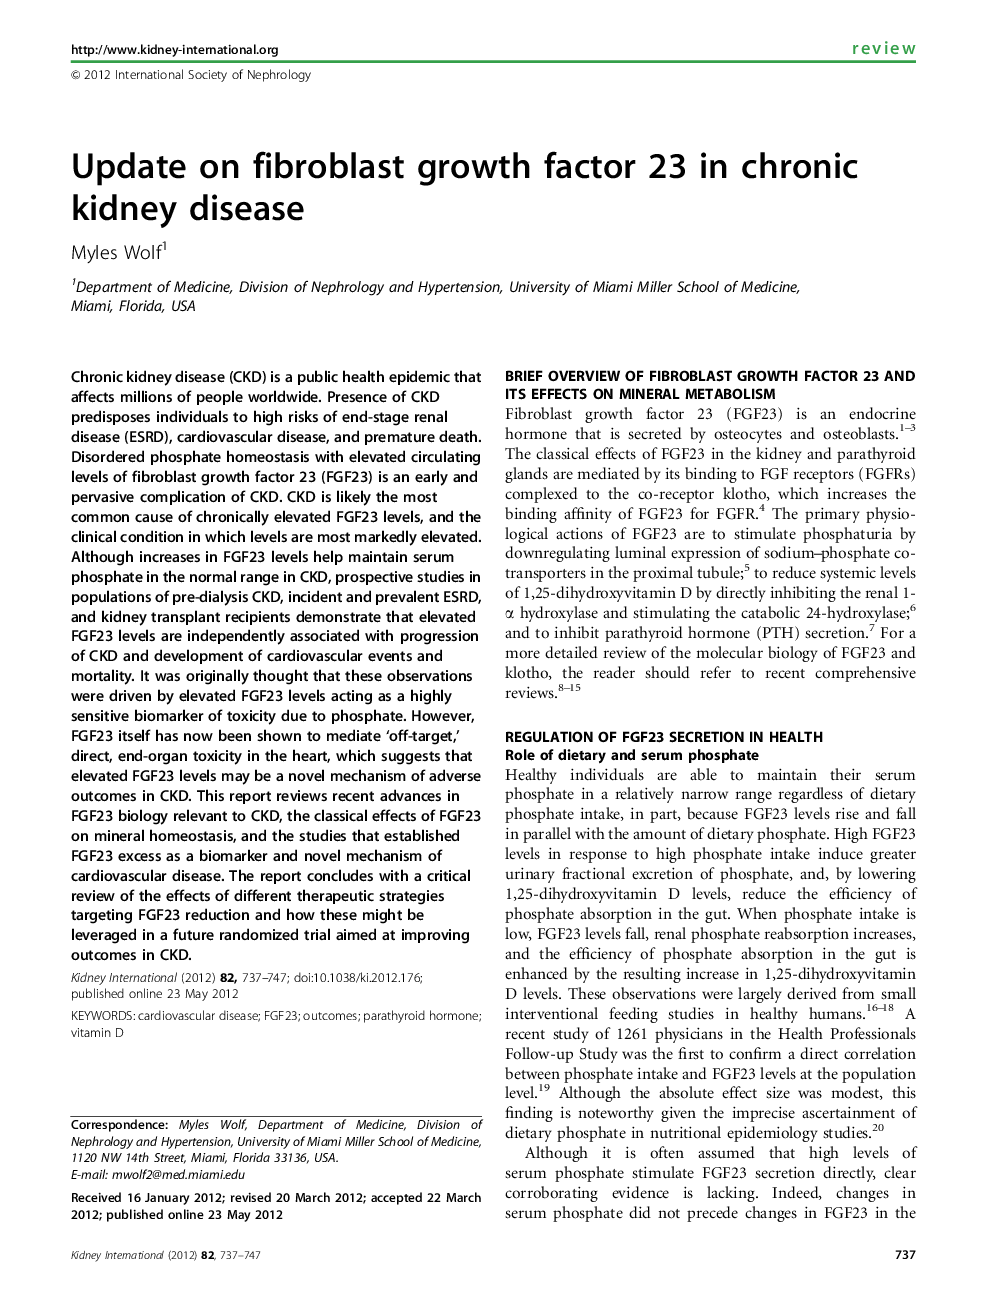 Update on fibroblast growth factor 23 in chronic kidney disease 